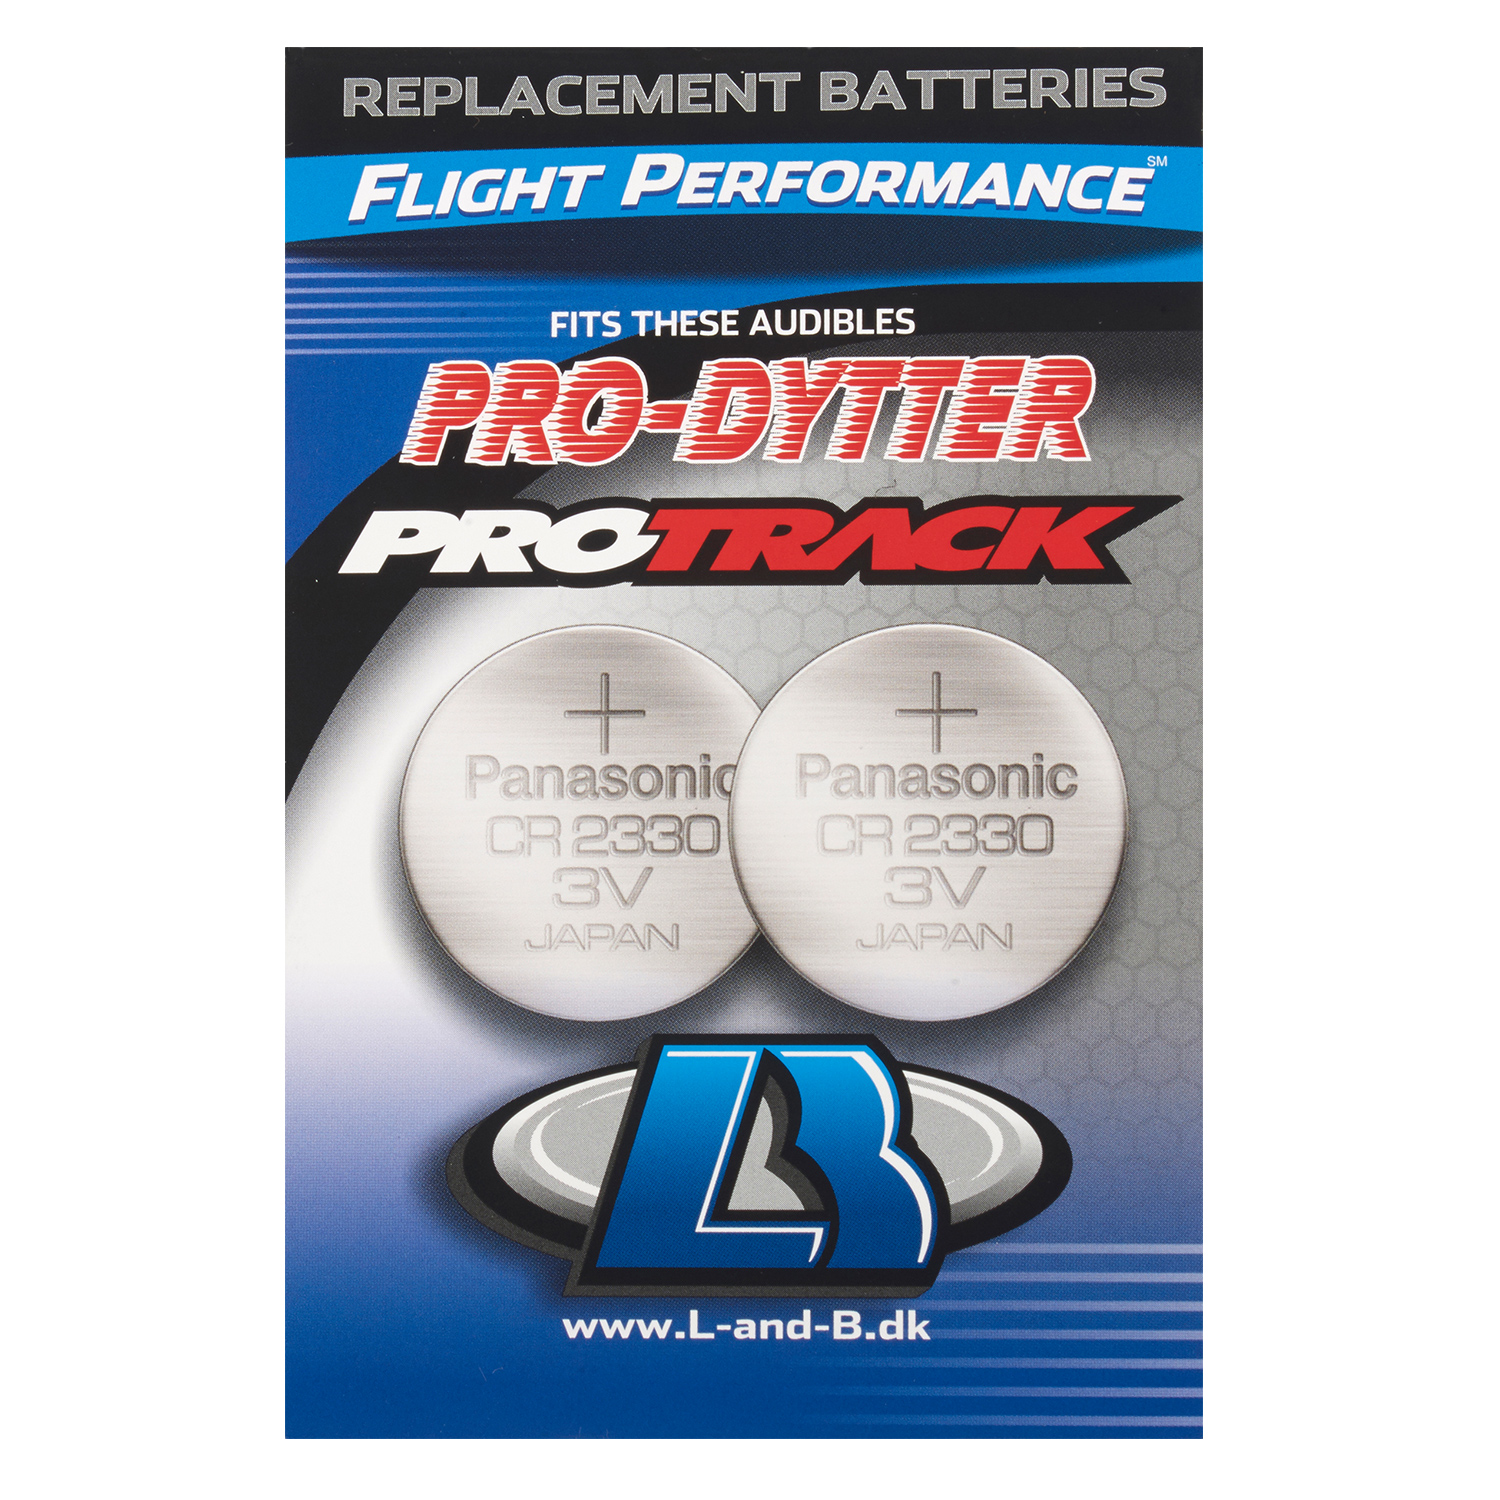 Batterien für Pro-Track, Pro-Dytter